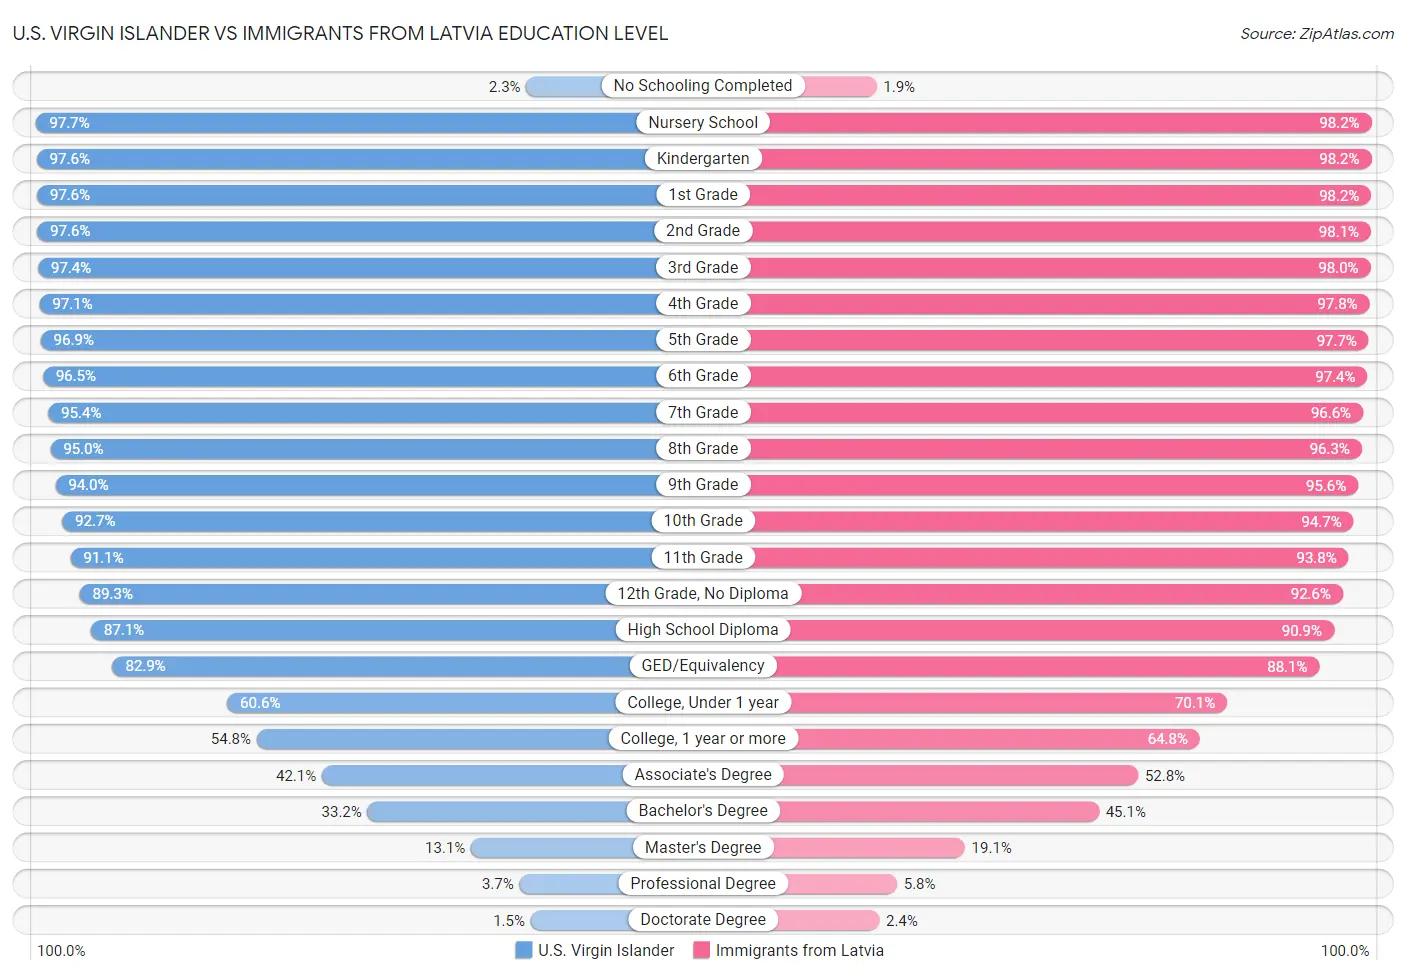 U.S. Virgin Islander vs Immigrants from Latvia Education Level